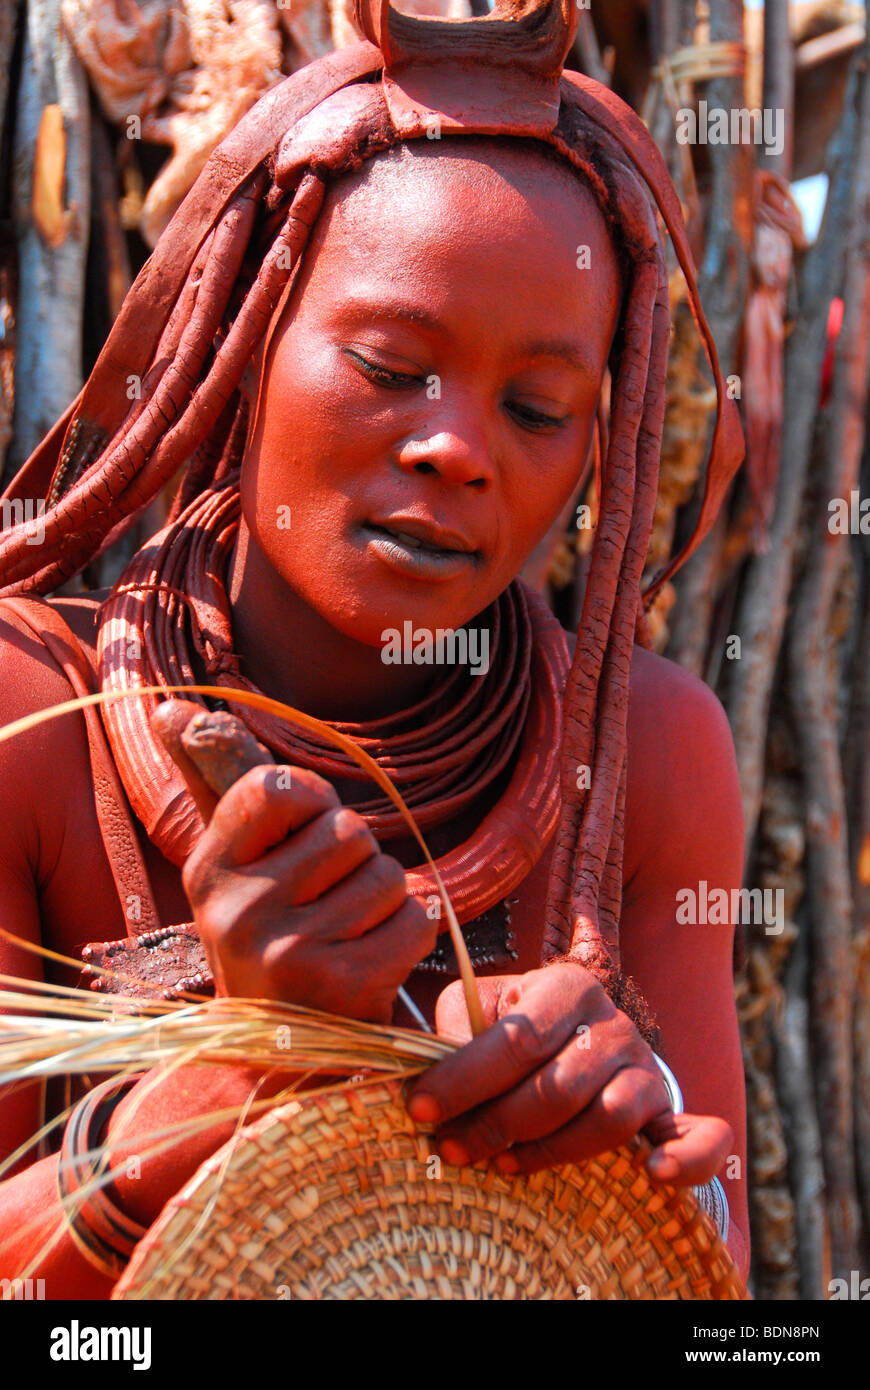 Himba woman making a bast mat, handicrafts, Purros, Kaokoveld, Namibia, Africa Stock Photo